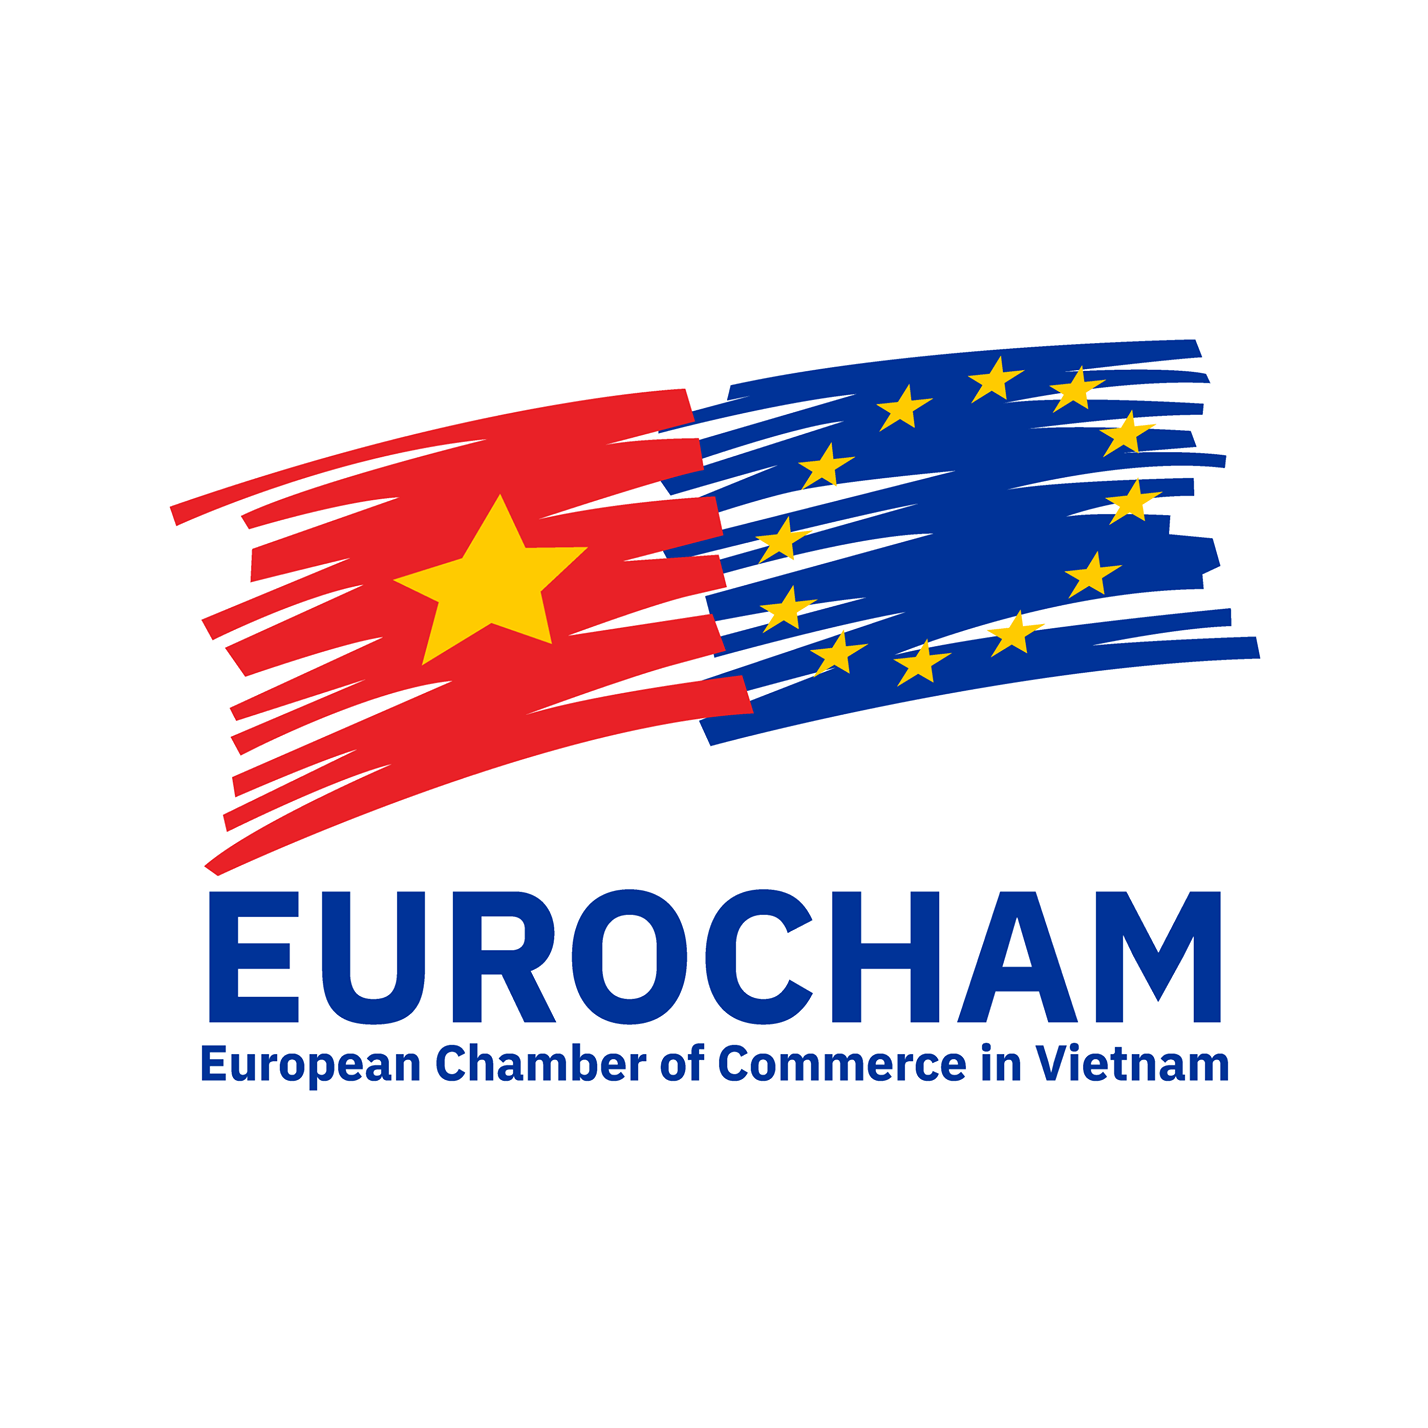 European Chamber of Commerce in Vietnam